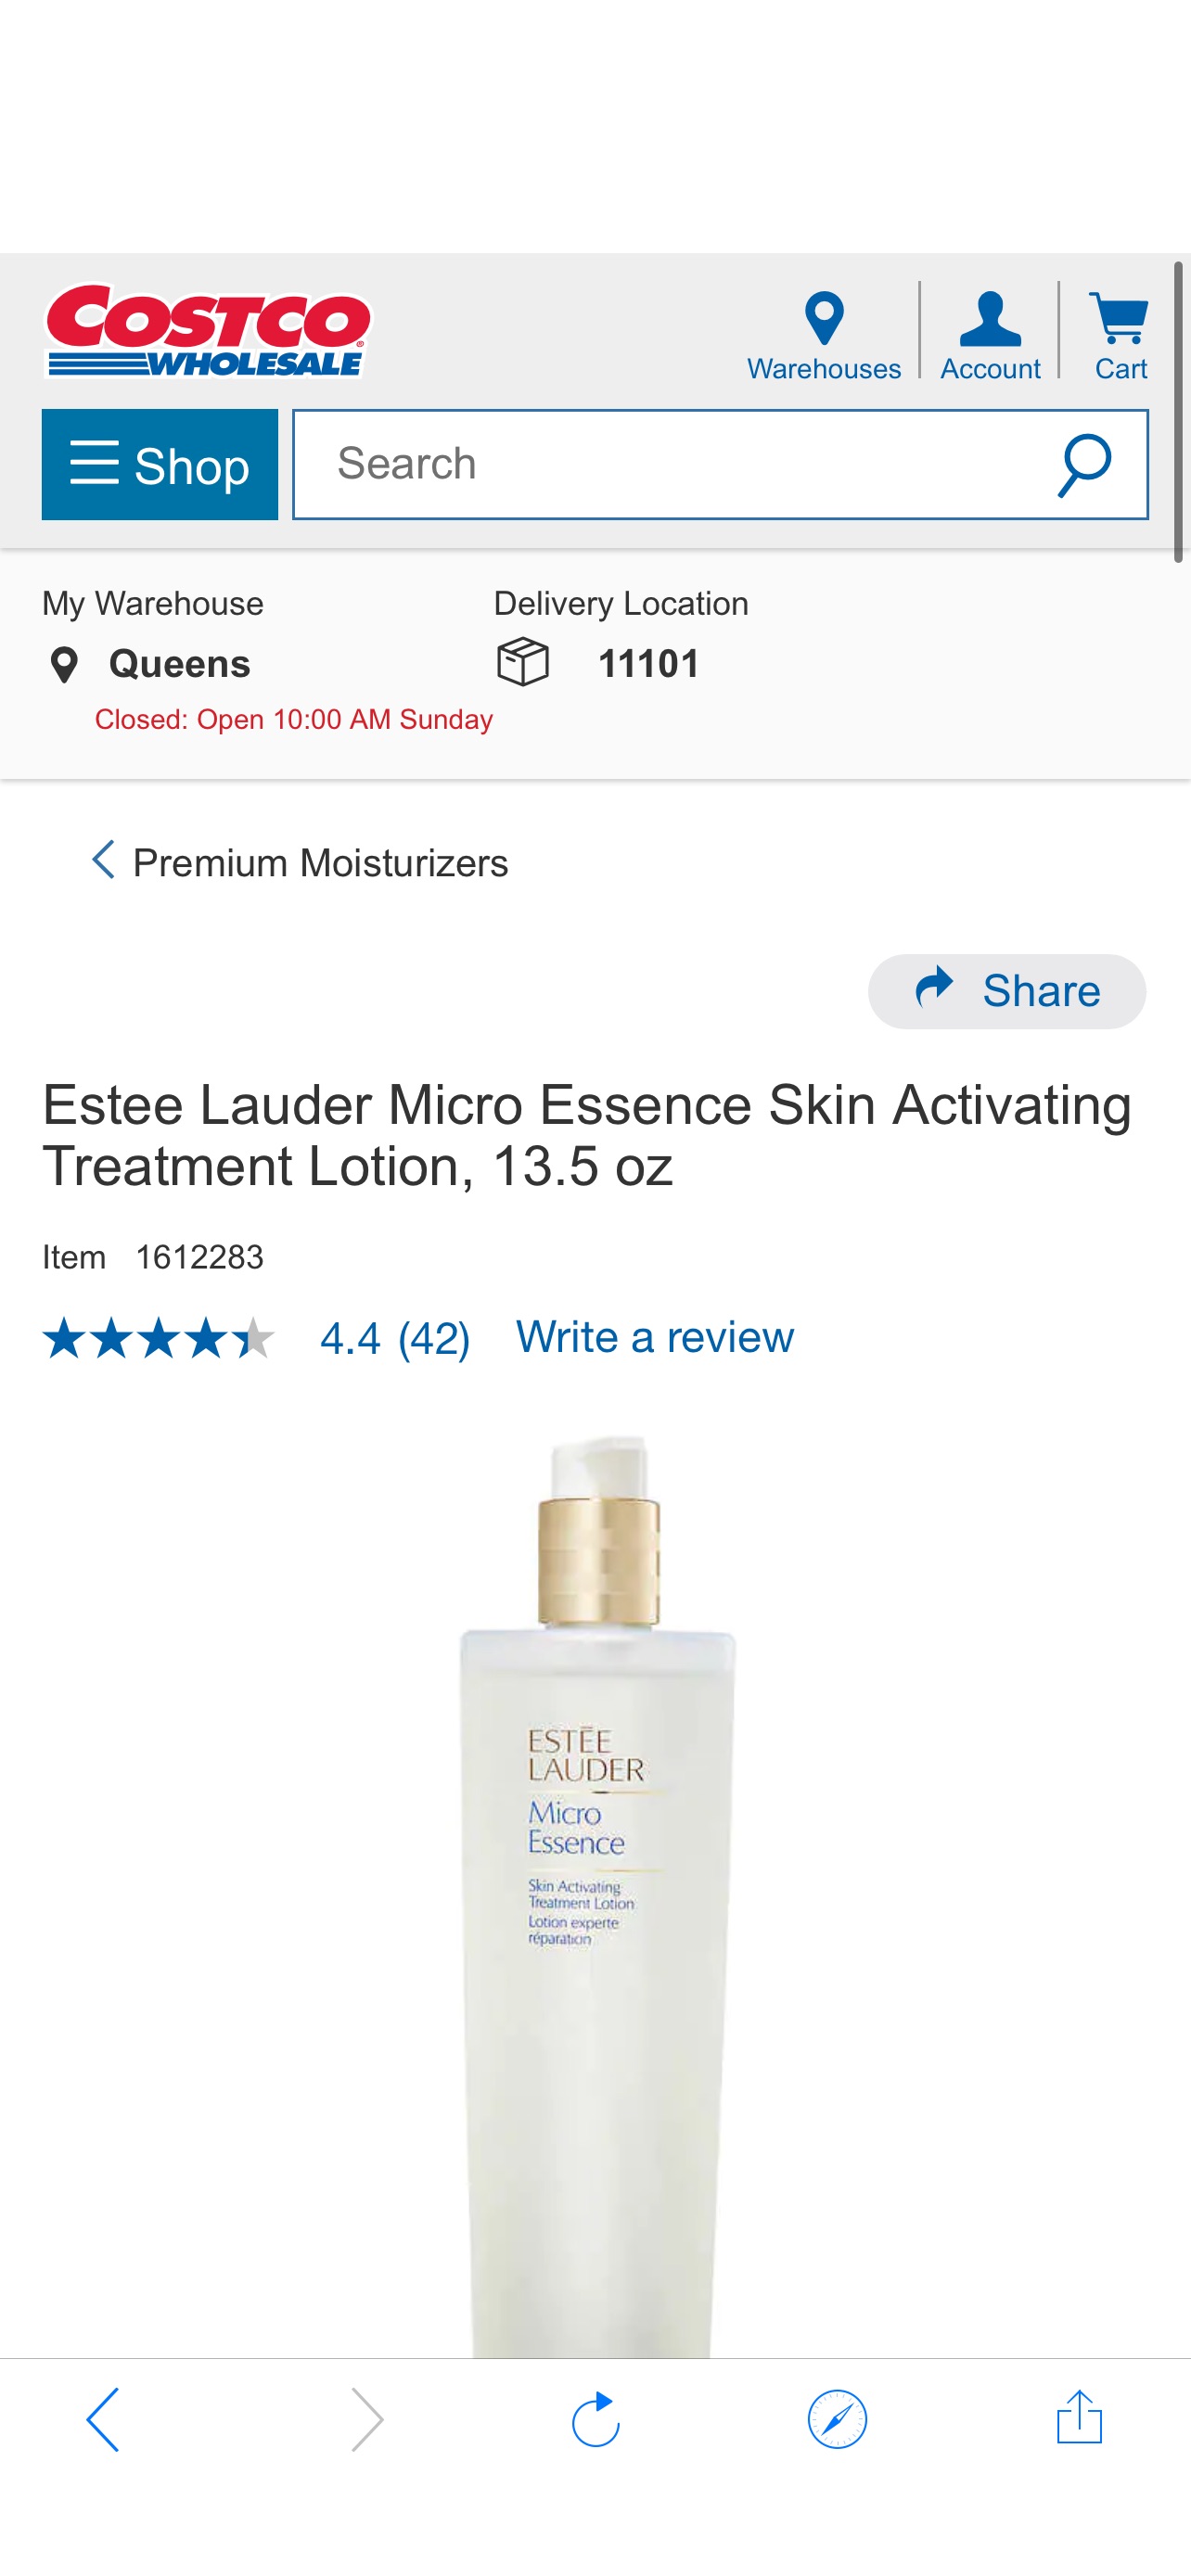 Estee Lauder Micro Essence Skin Activating Treatment Lotion, 13.5 oz | Costco